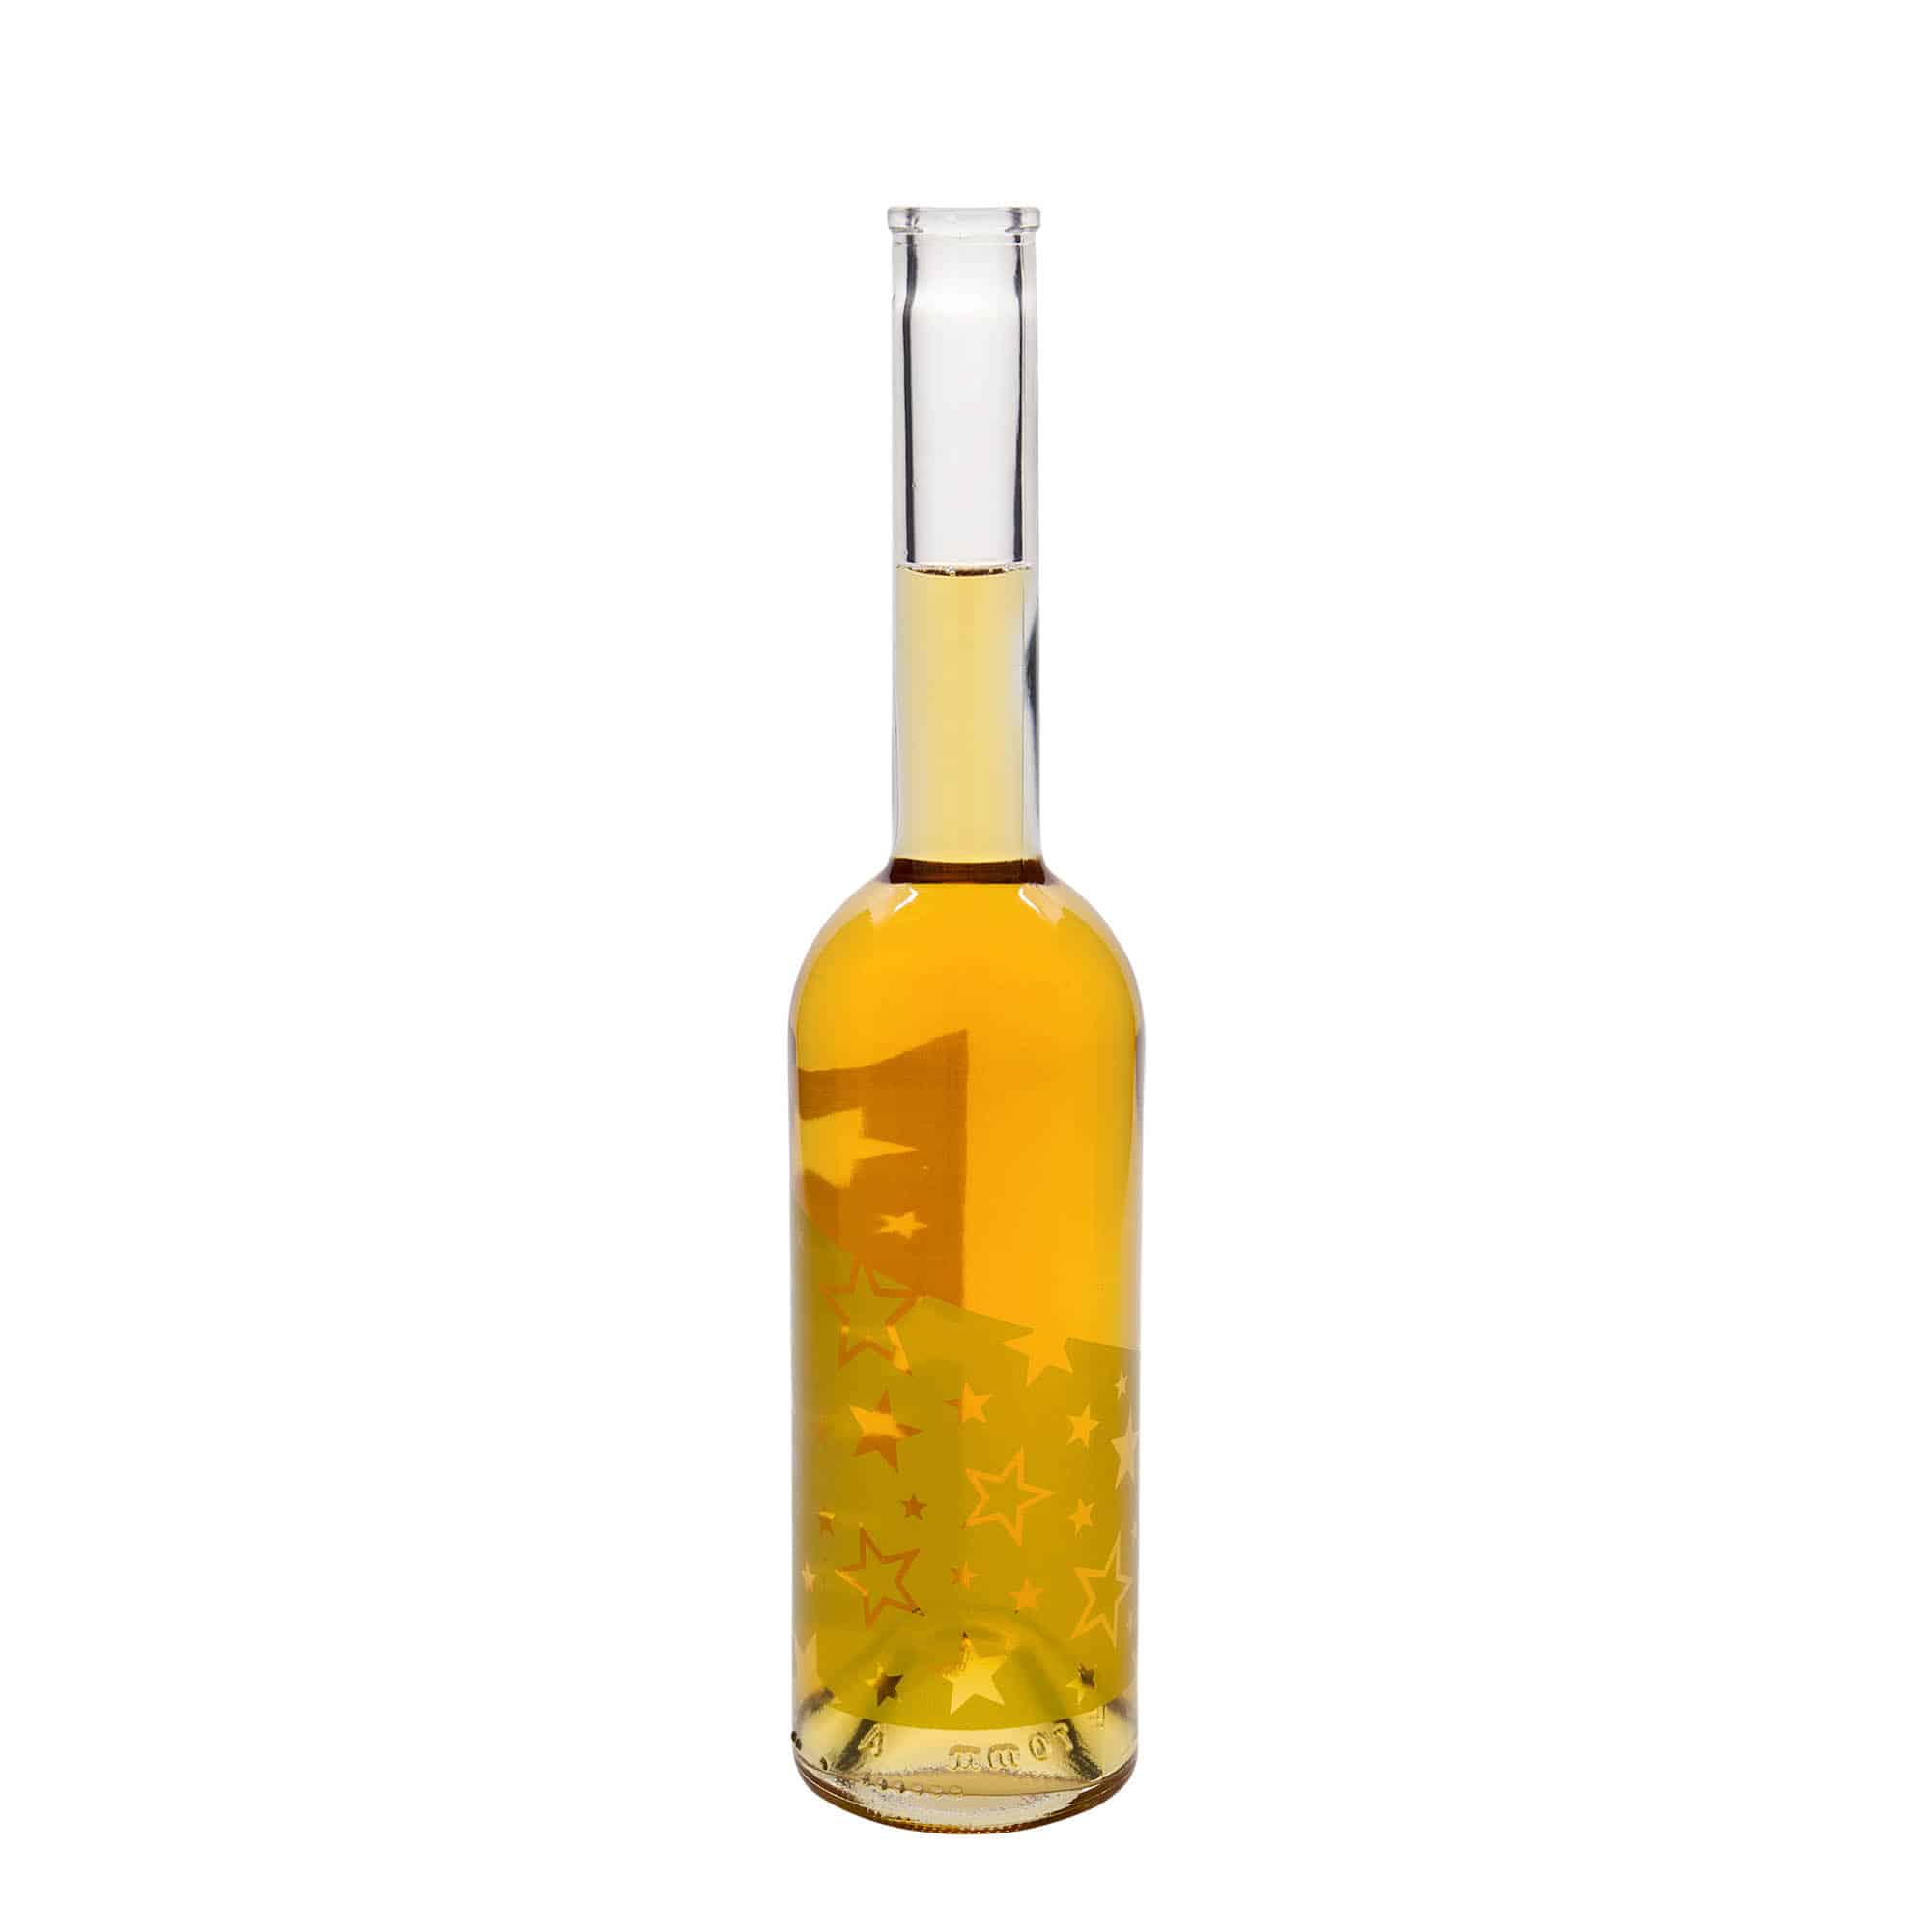 500 ml glass bottle 'Opera', print: gold stars, closure: cork